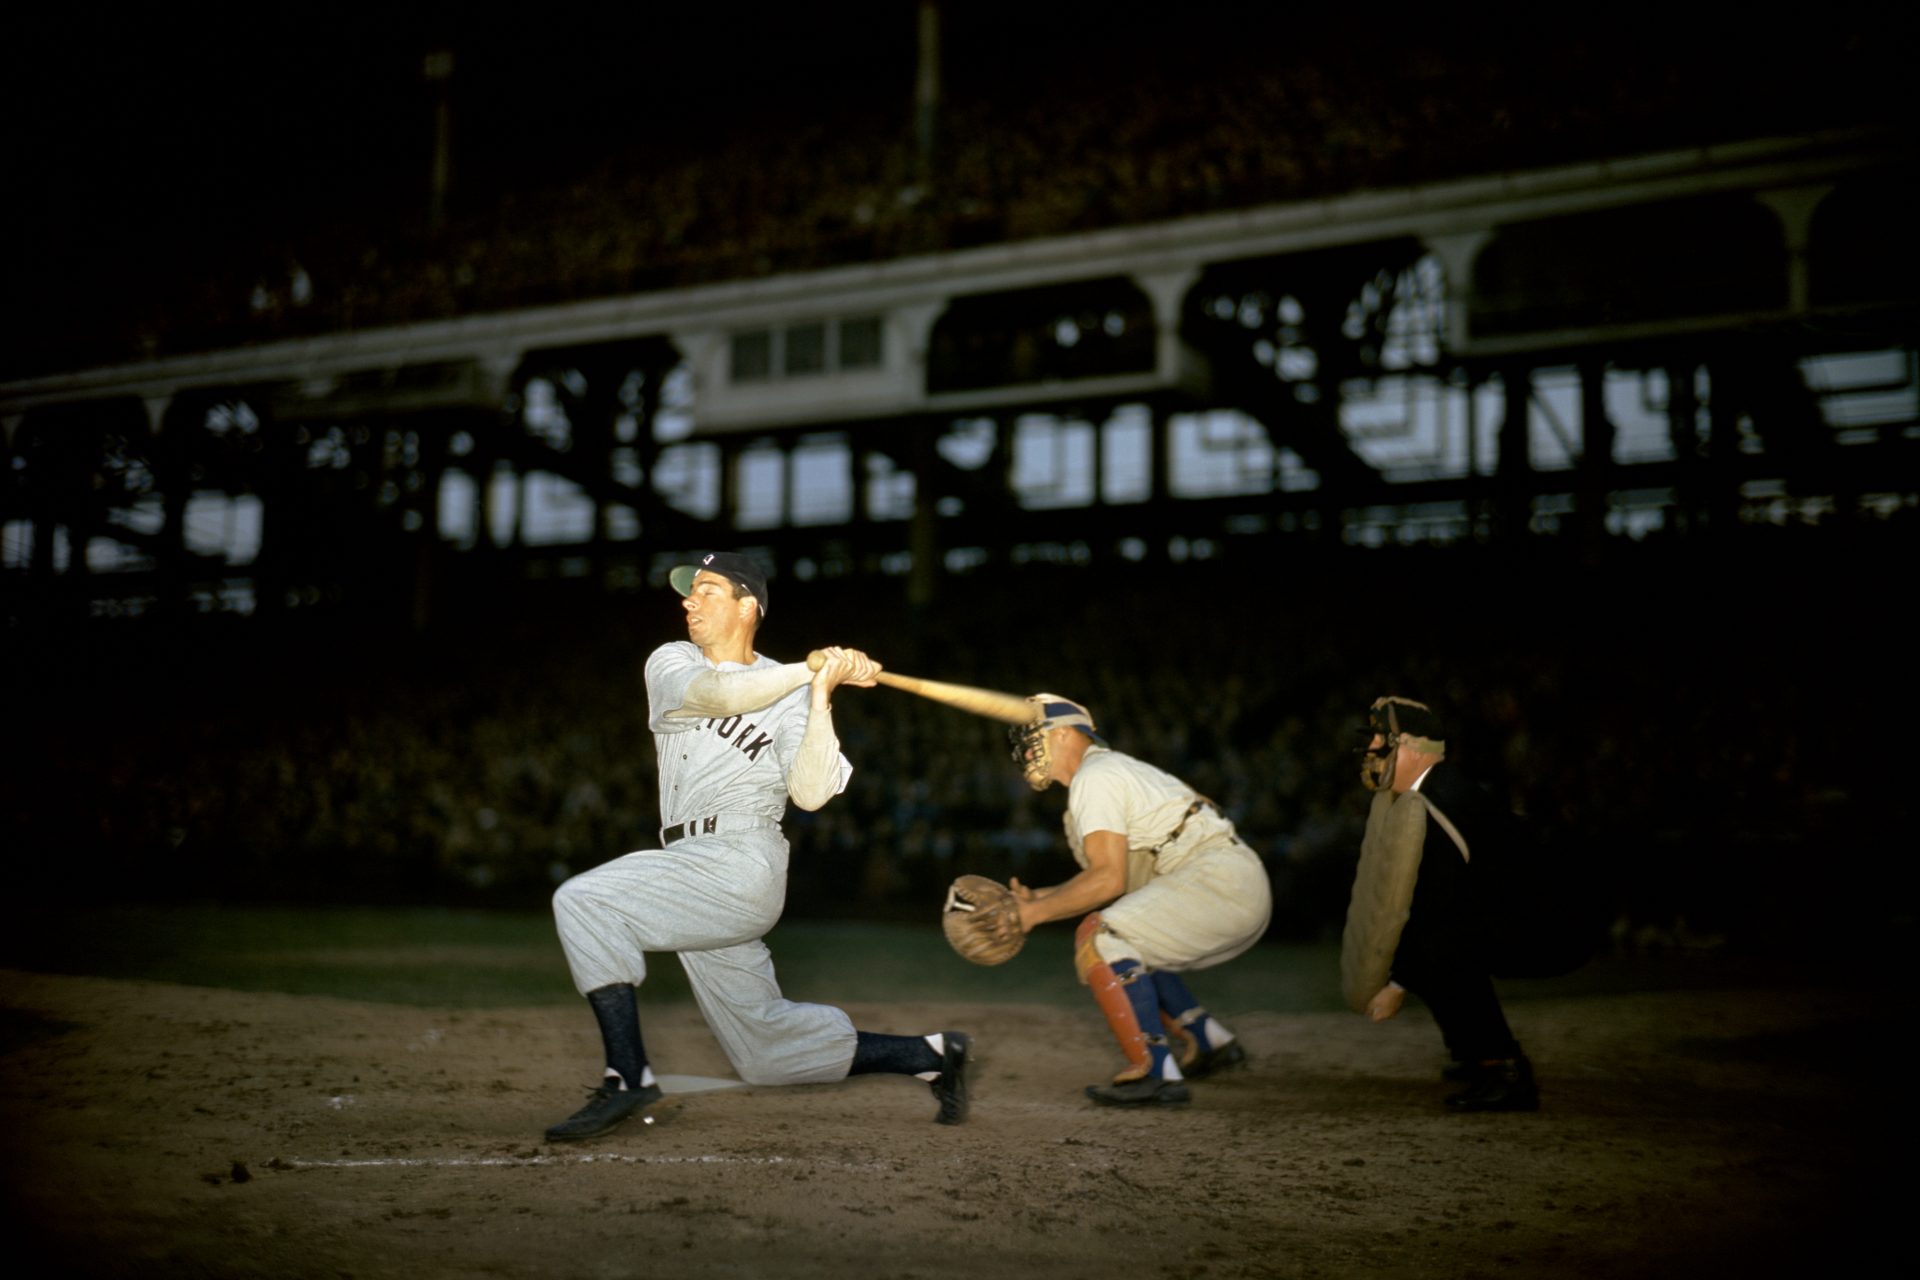 Joe DiMaggio: The tragic story behind one of baseball's biggest legends